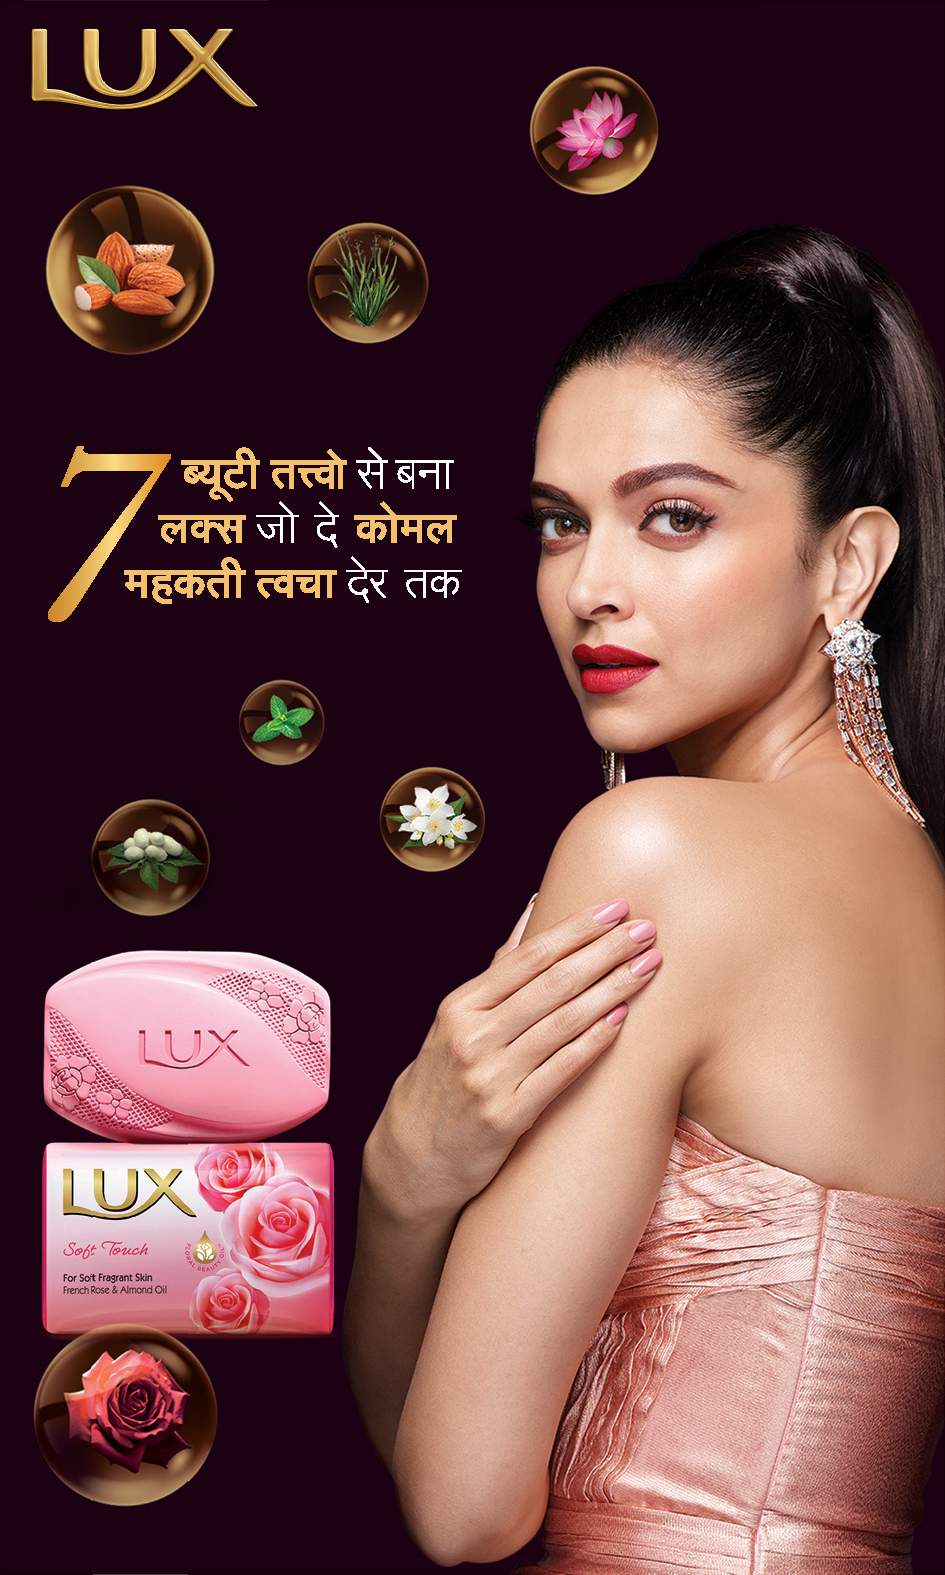 lux-soap-7-beauty-tatvo-se-bana-ad-dainik-jagran-delhi-27-06-2019.jpg